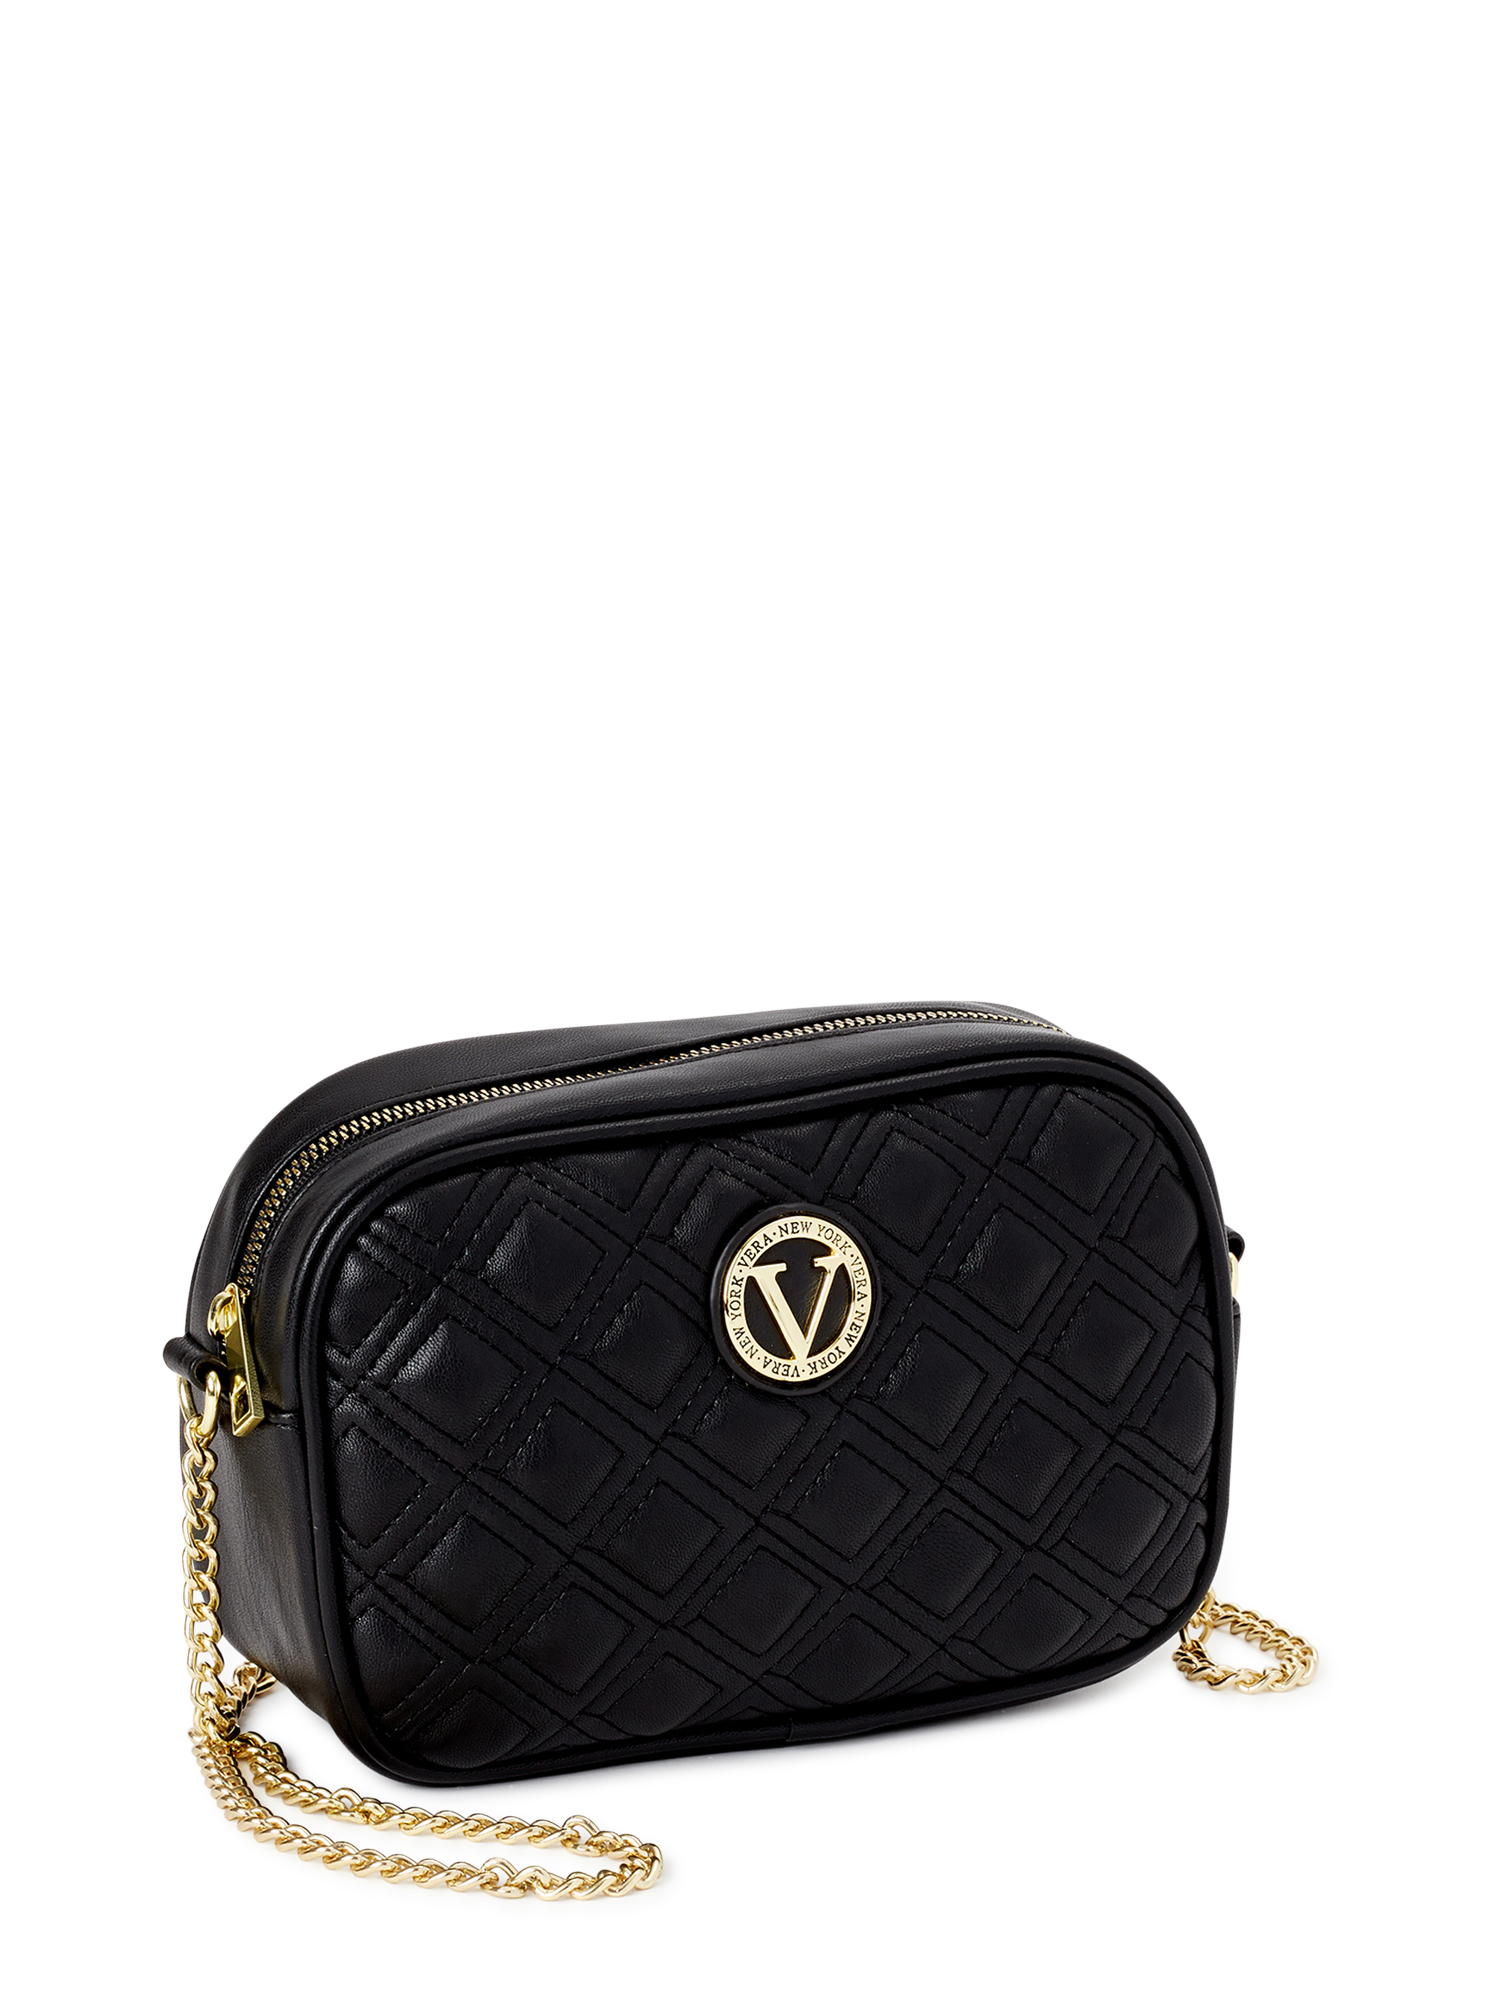 Vera New York Women's Marina Quilted Crossbody Handbag with Chain Straps Black - image 2 of 5